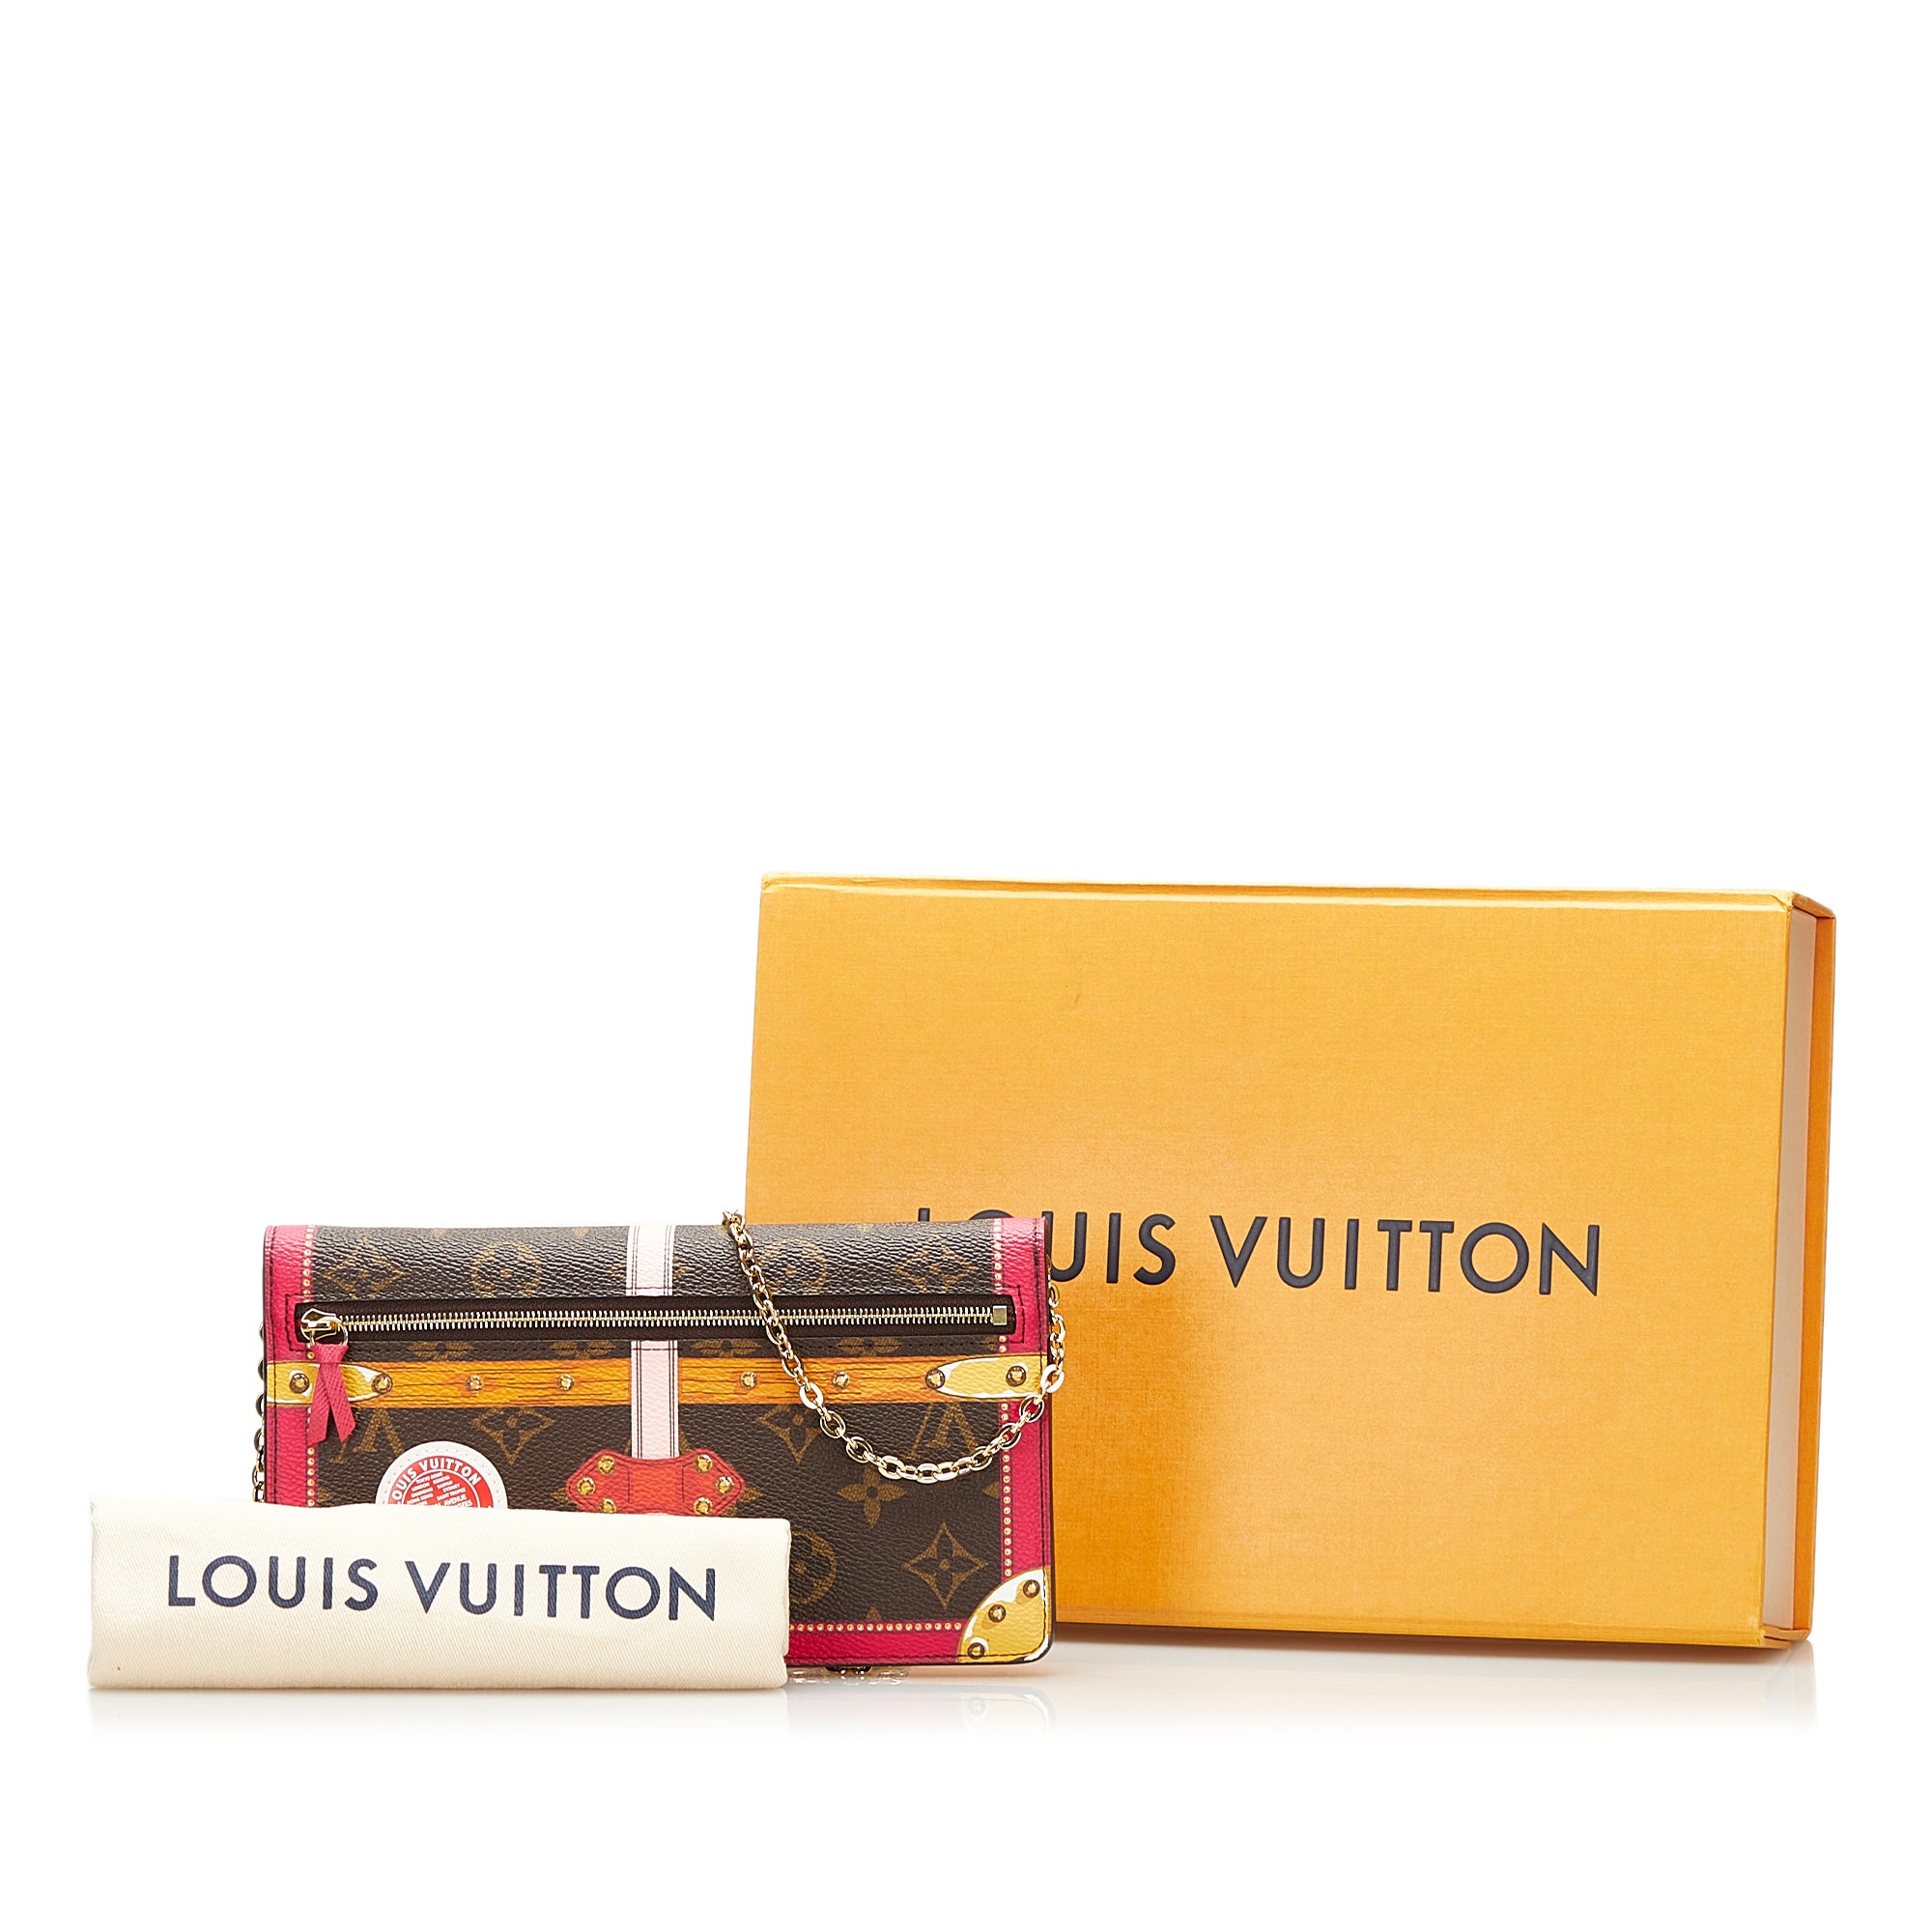 Louis Vuitton Trunks & Bags Limited Edition Monogram Canvas Wallet